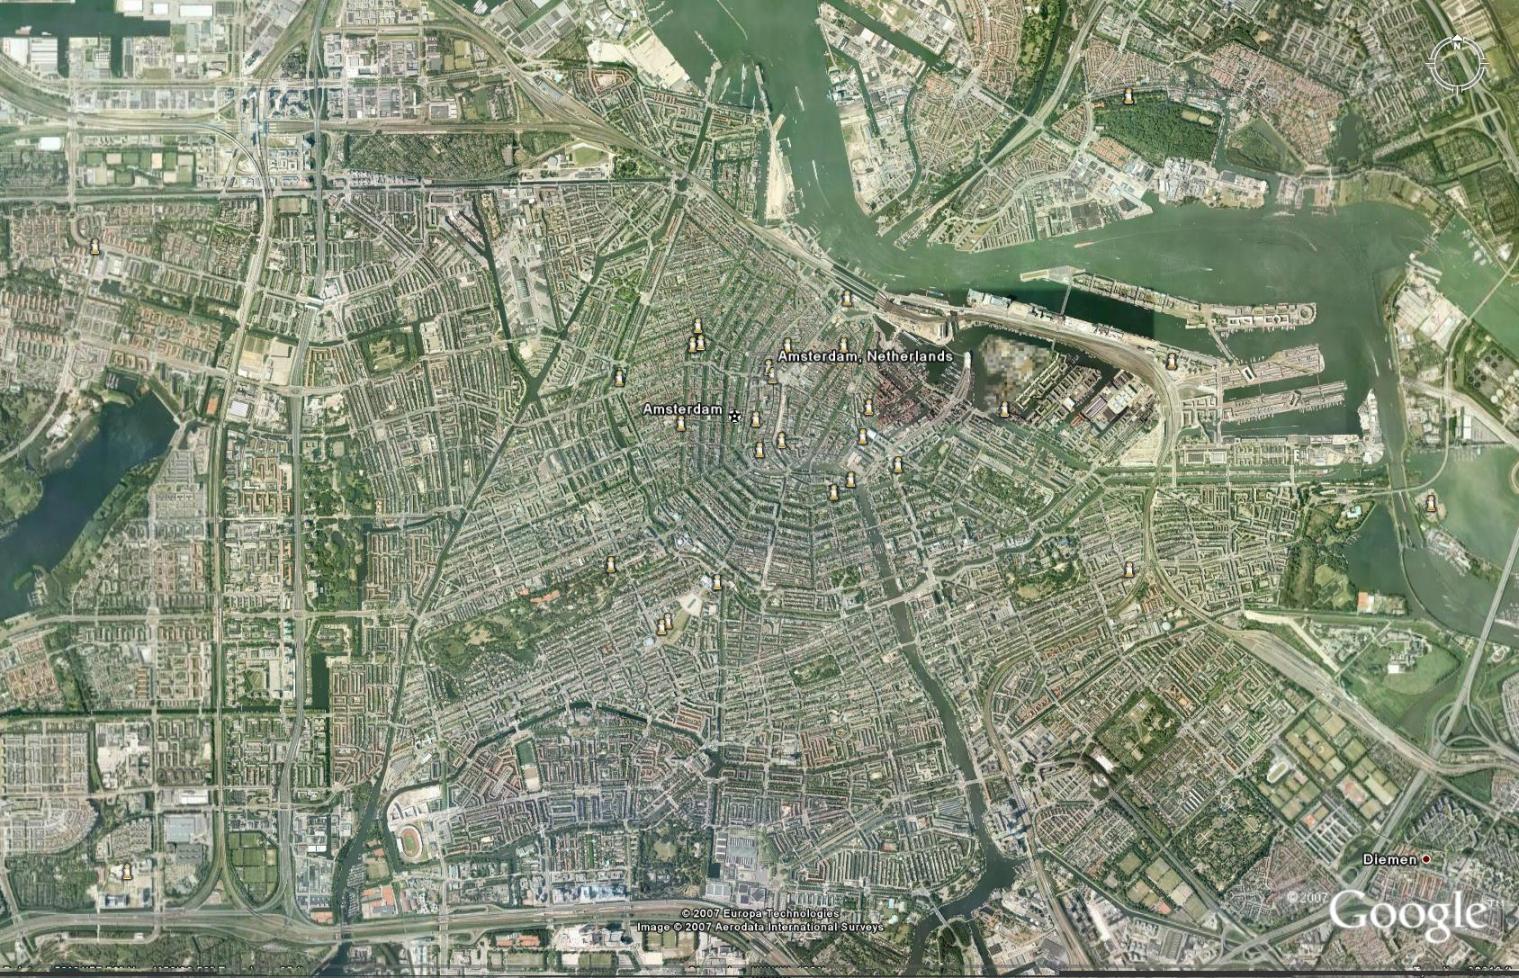 001: Google Maps, Amsterdam